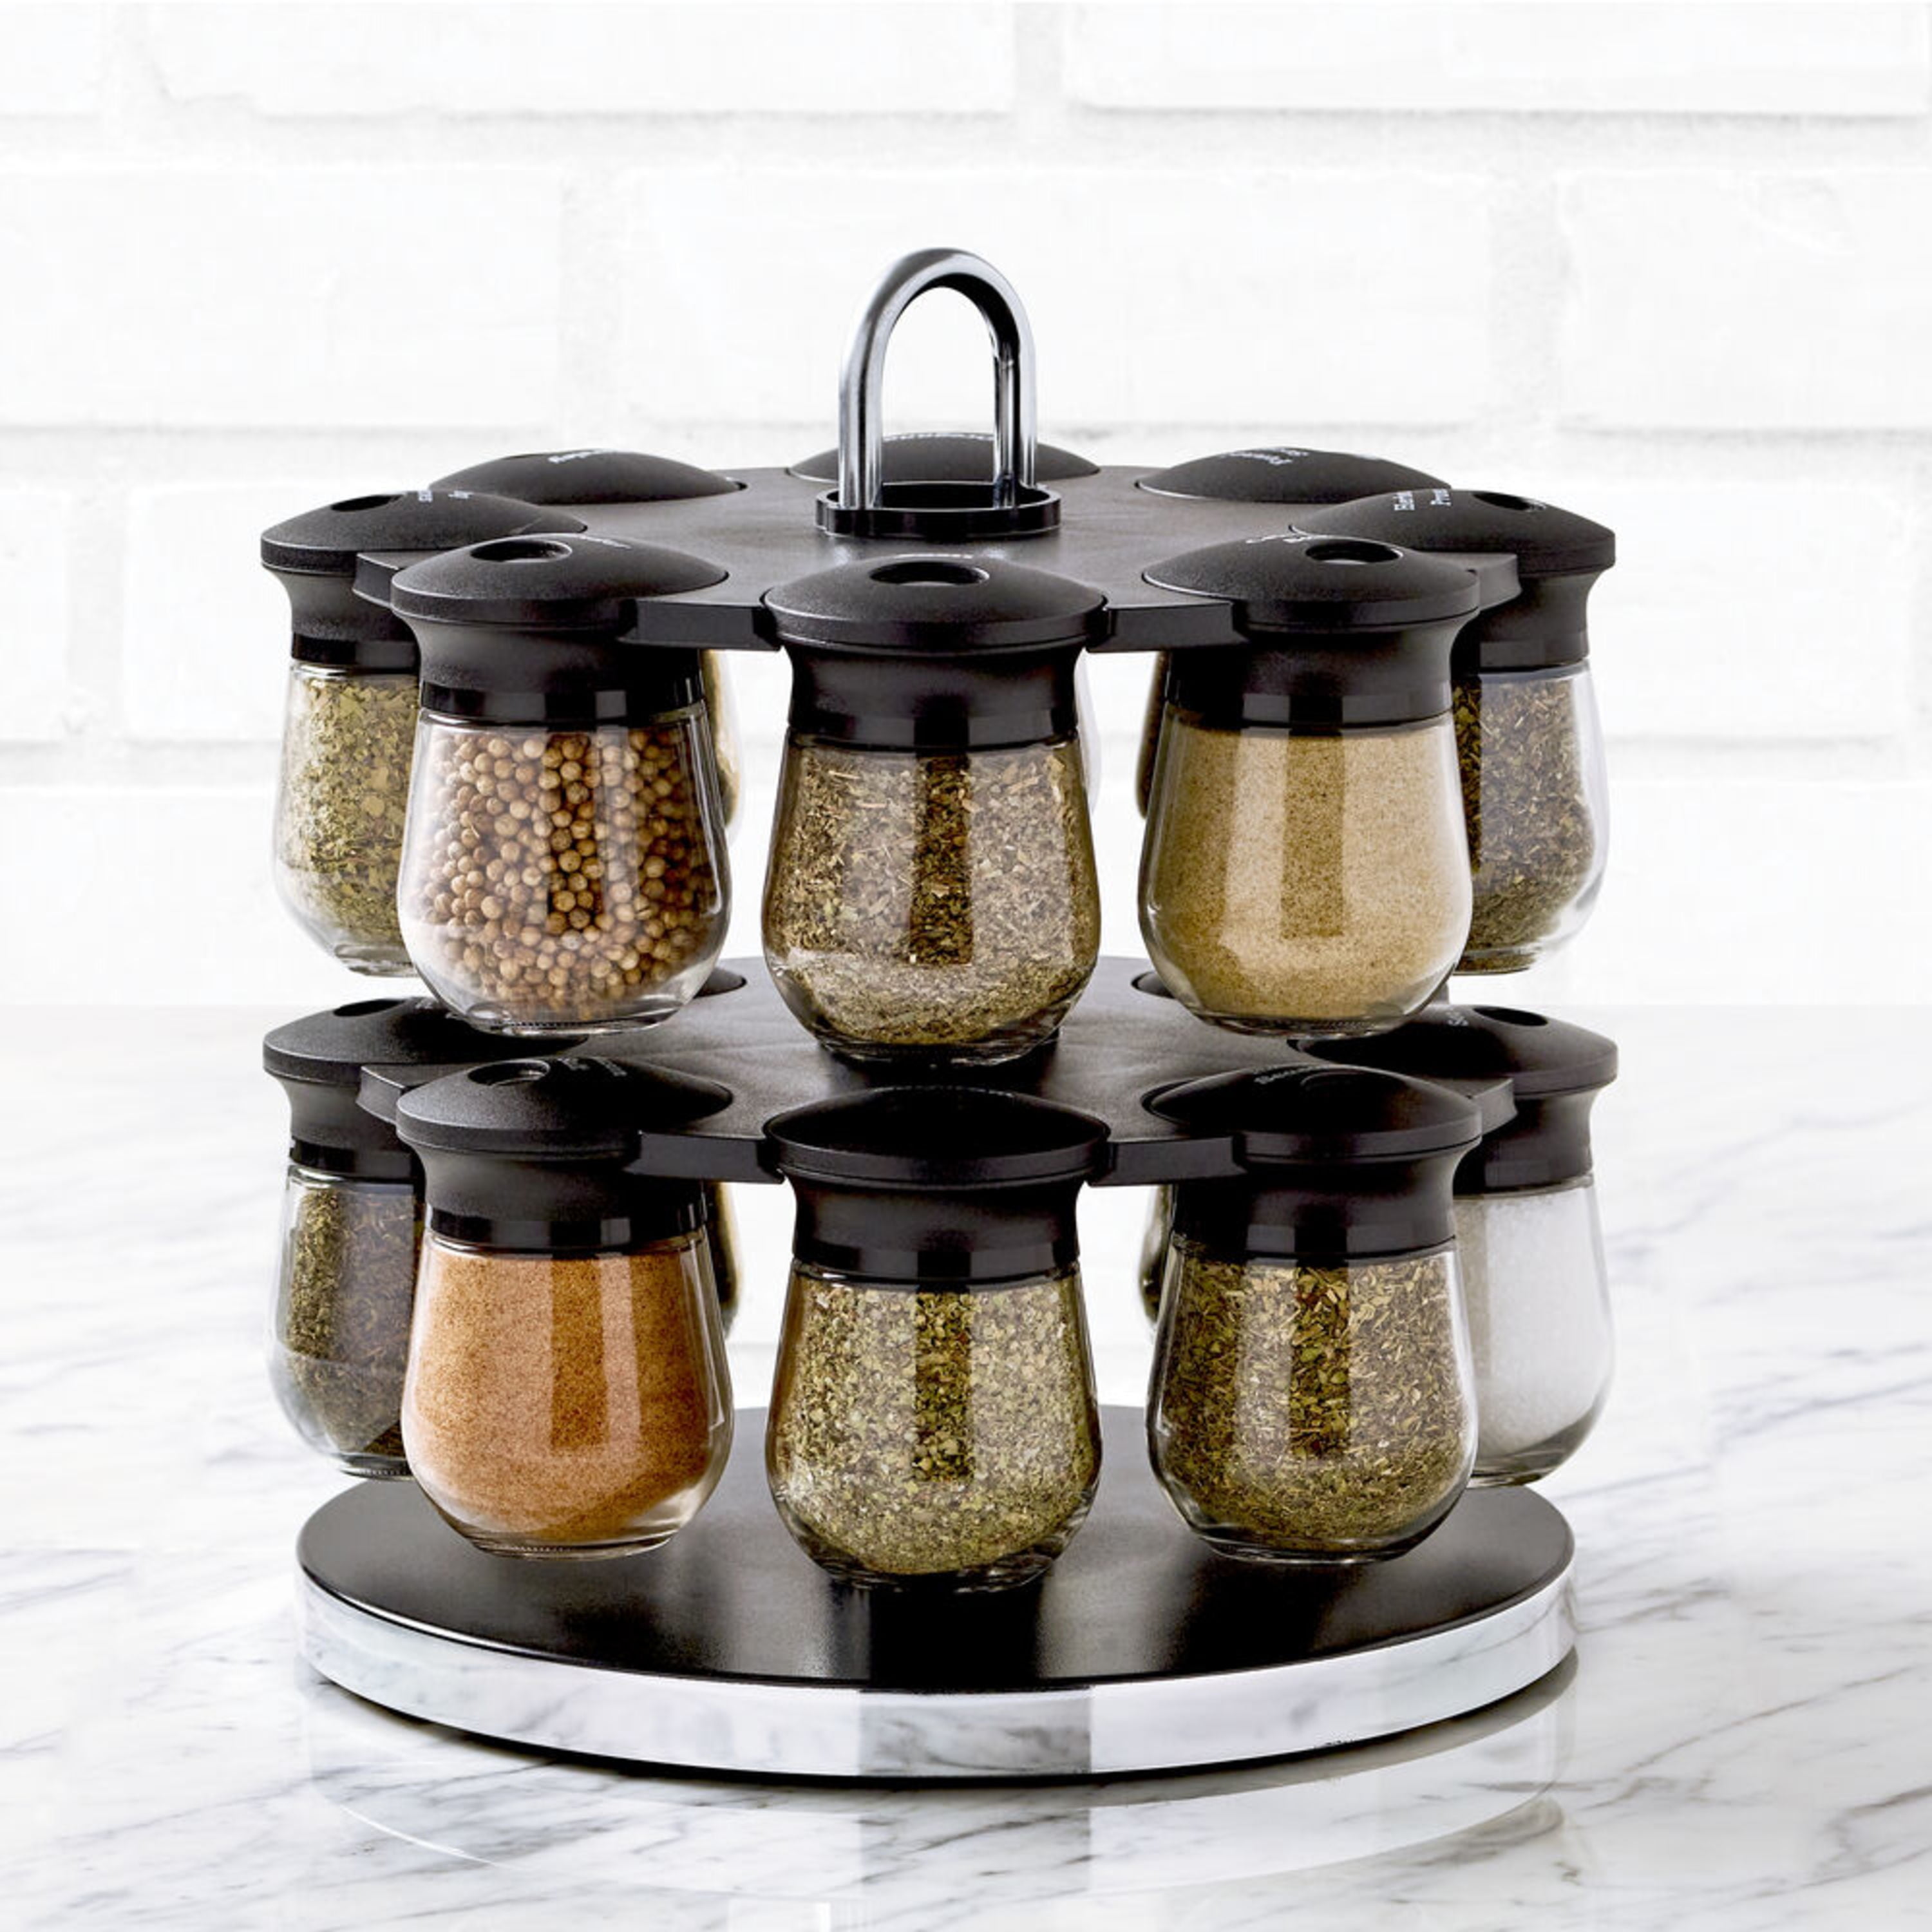 Kamenstein Criss-Cross Pine Spice Rack with 10 Pre-Filled Glass-Jars 